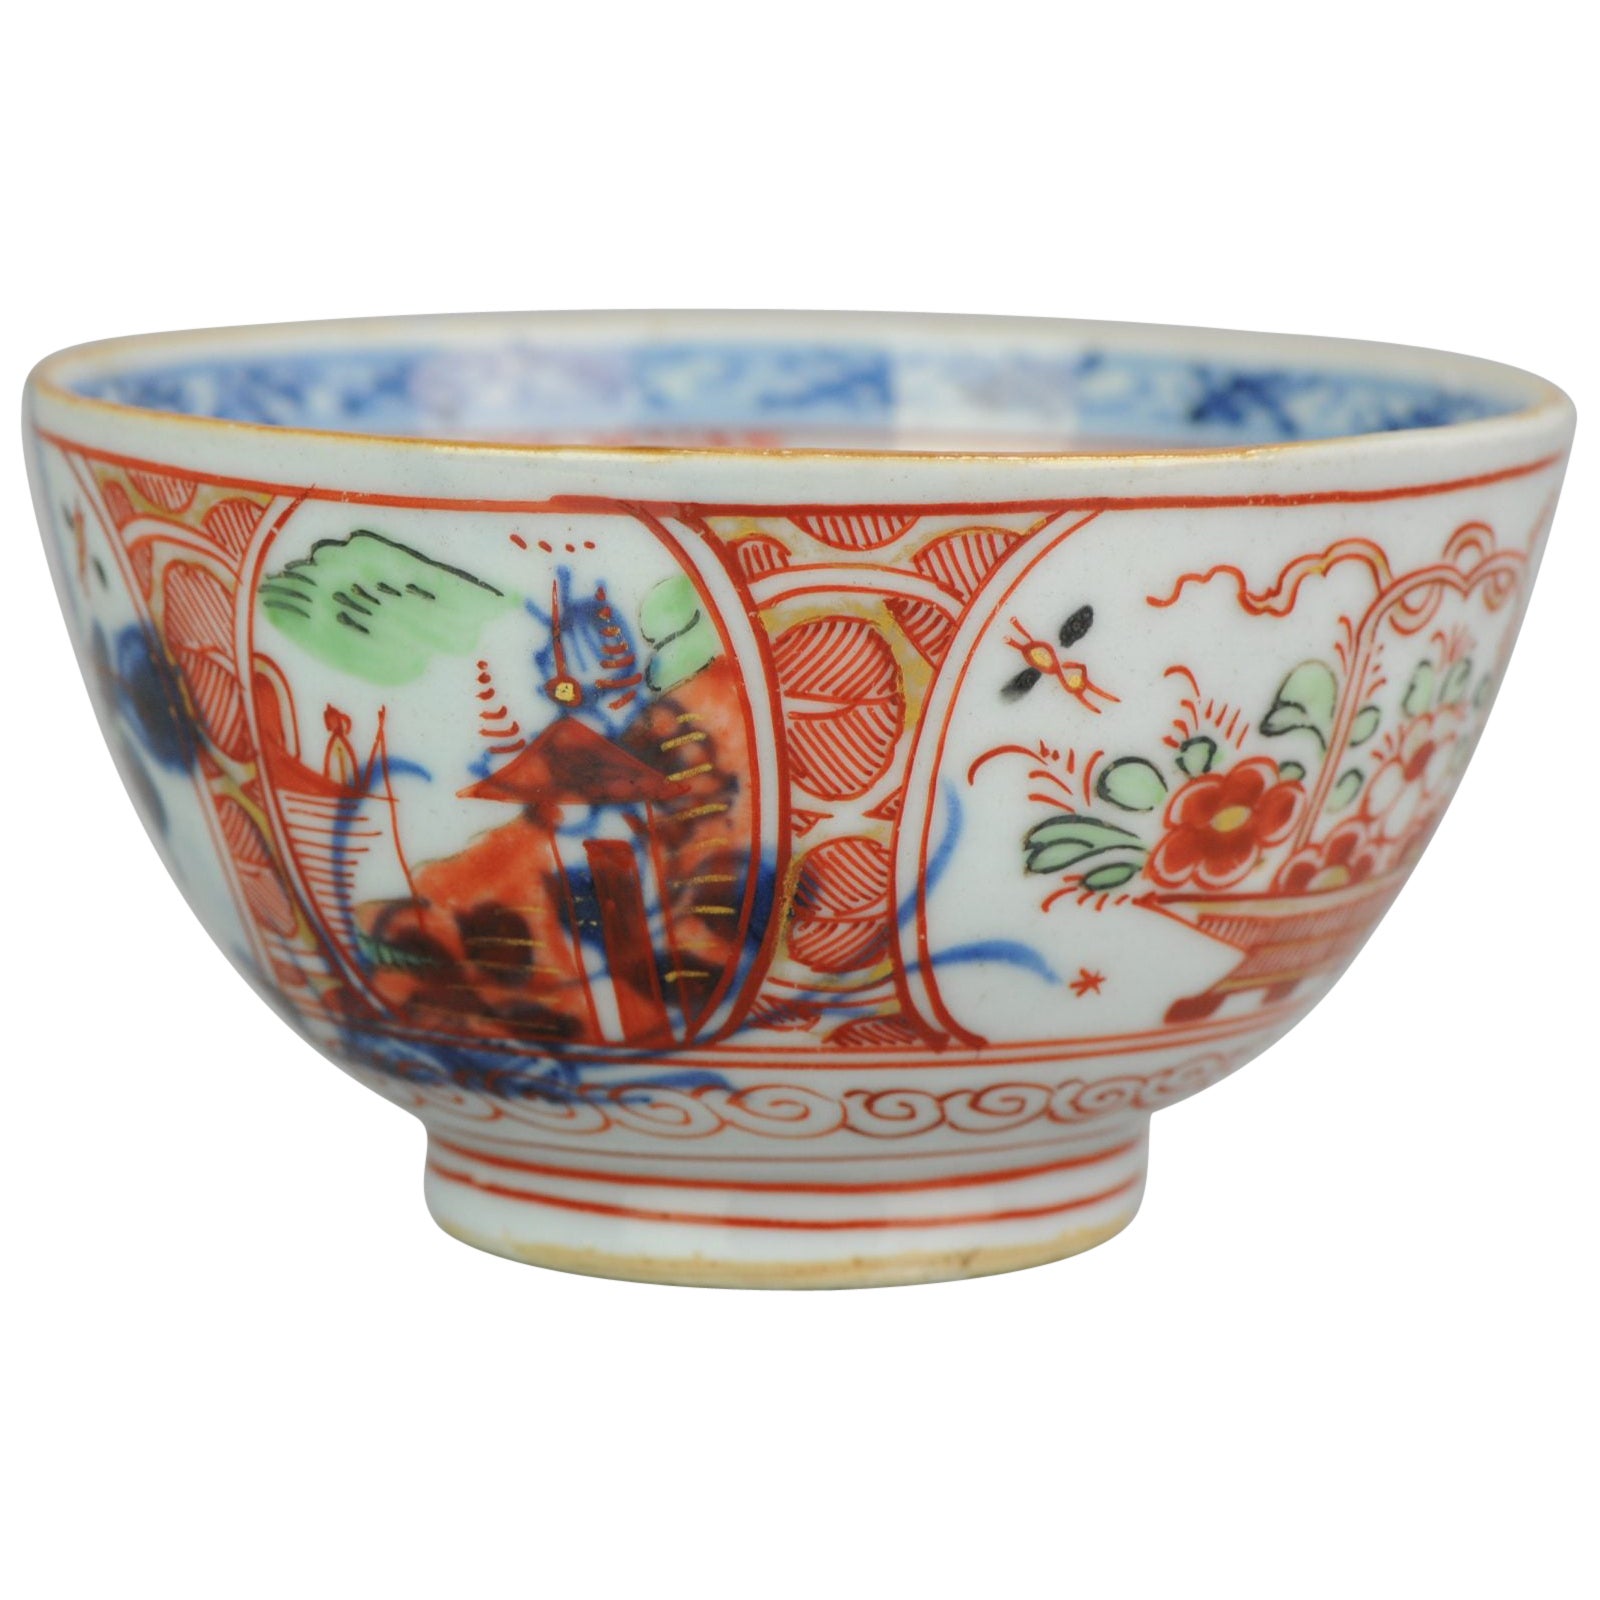 Antike Imari Porcelain Amsterdams Bont Schale aus der Qing Dynasty, 18. Jahrhundert